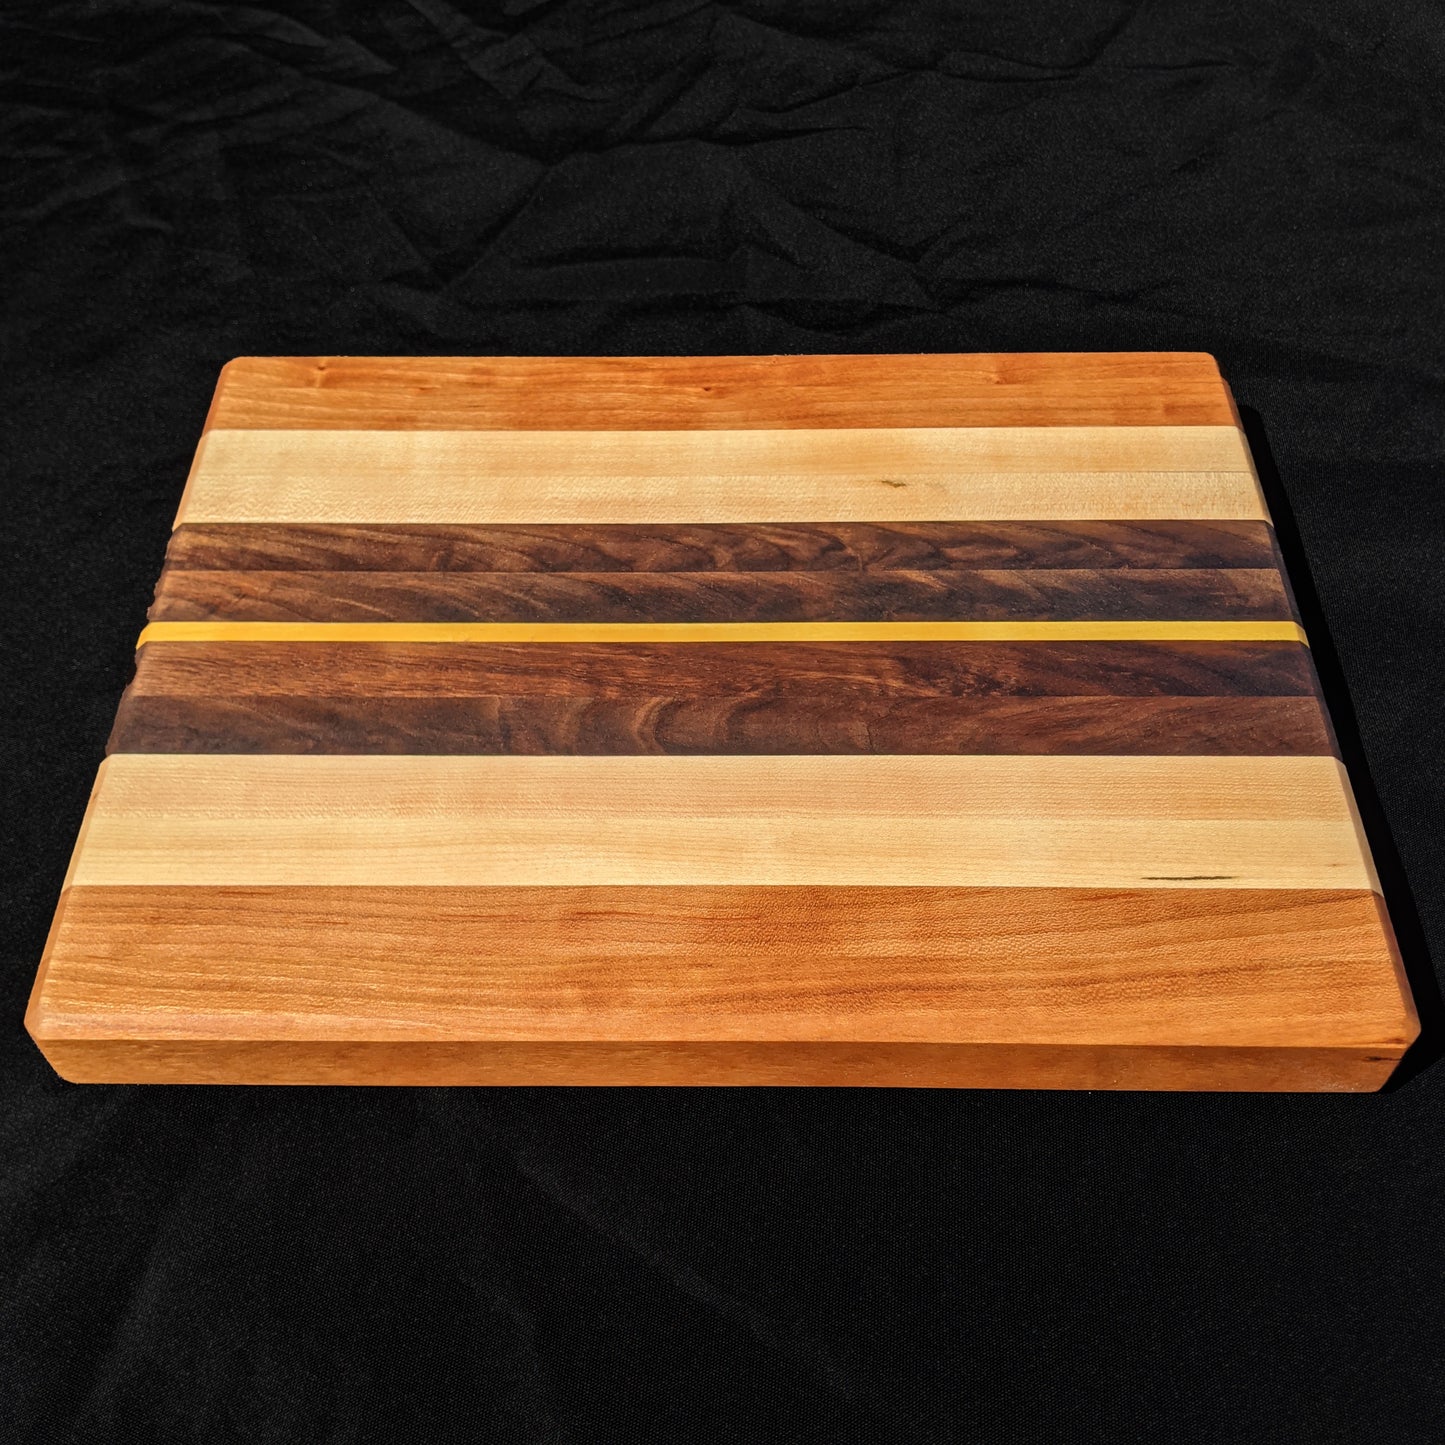 Cutting Board (12" x 9" x 1 1/8")